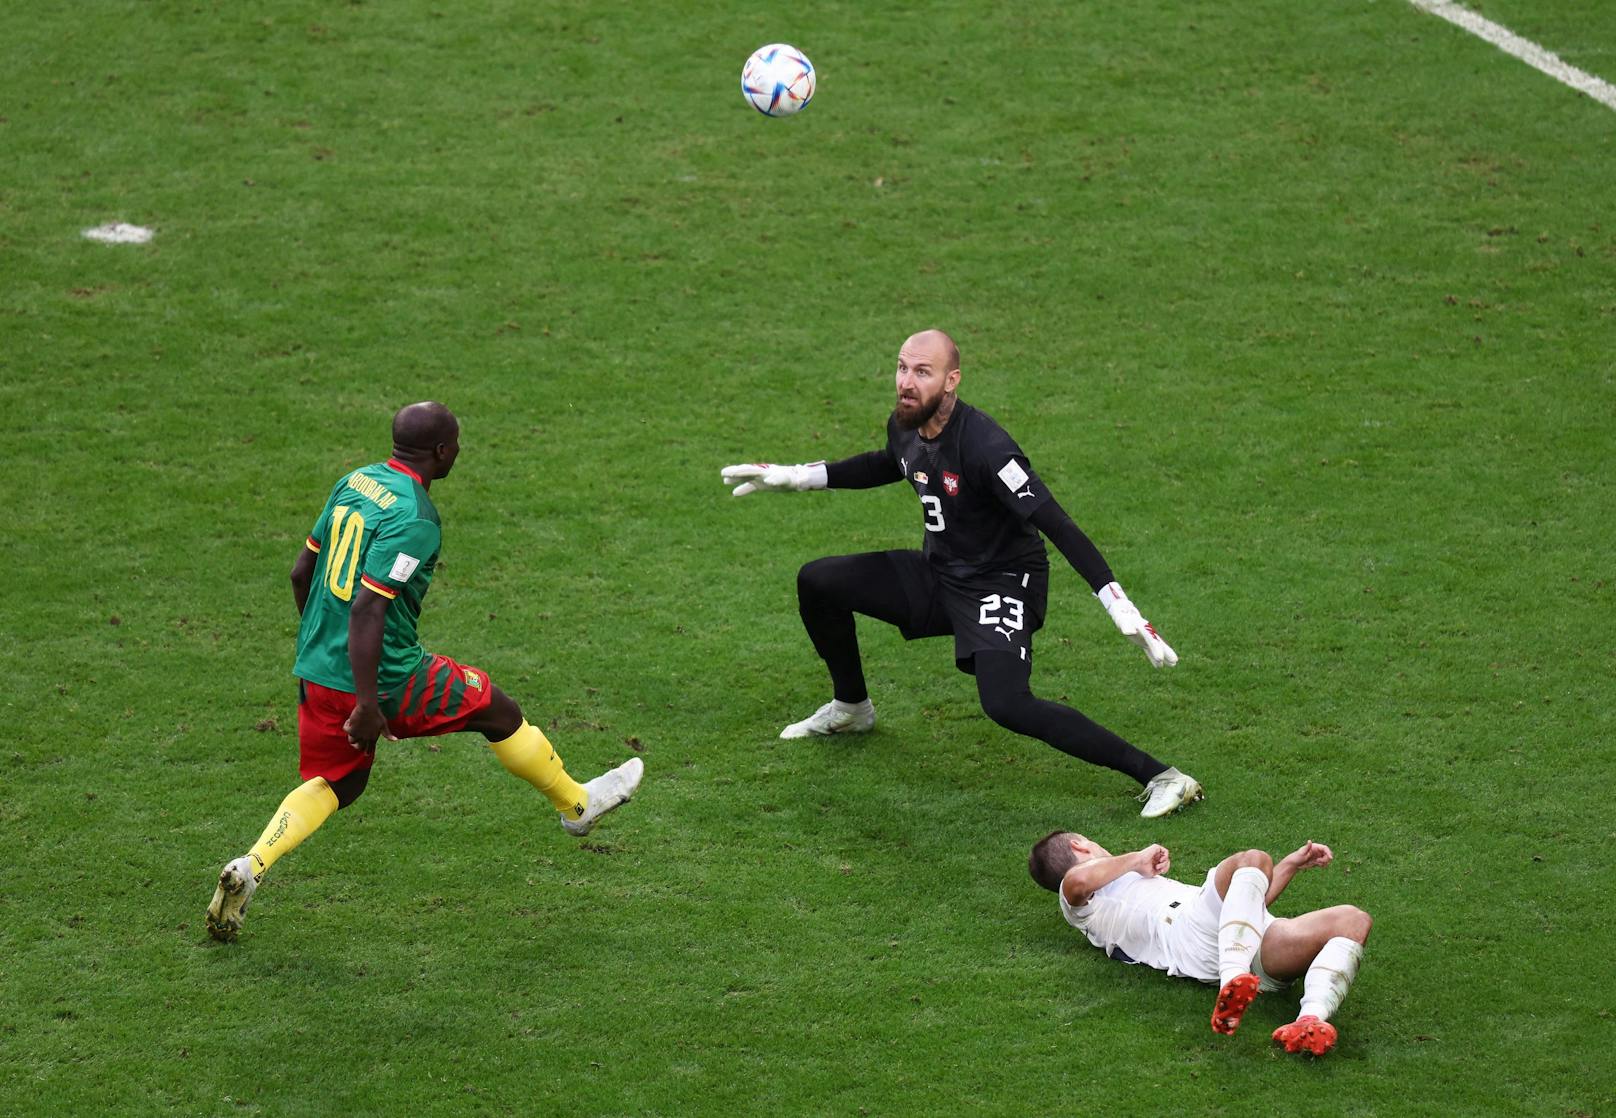 Ein echtes Traumtor gelang Kameruns Aboubakar beim 3:3 gegen Serbien. Der Stürmer überhob Keeper Milinkovic-Savic frech und spektakulär.